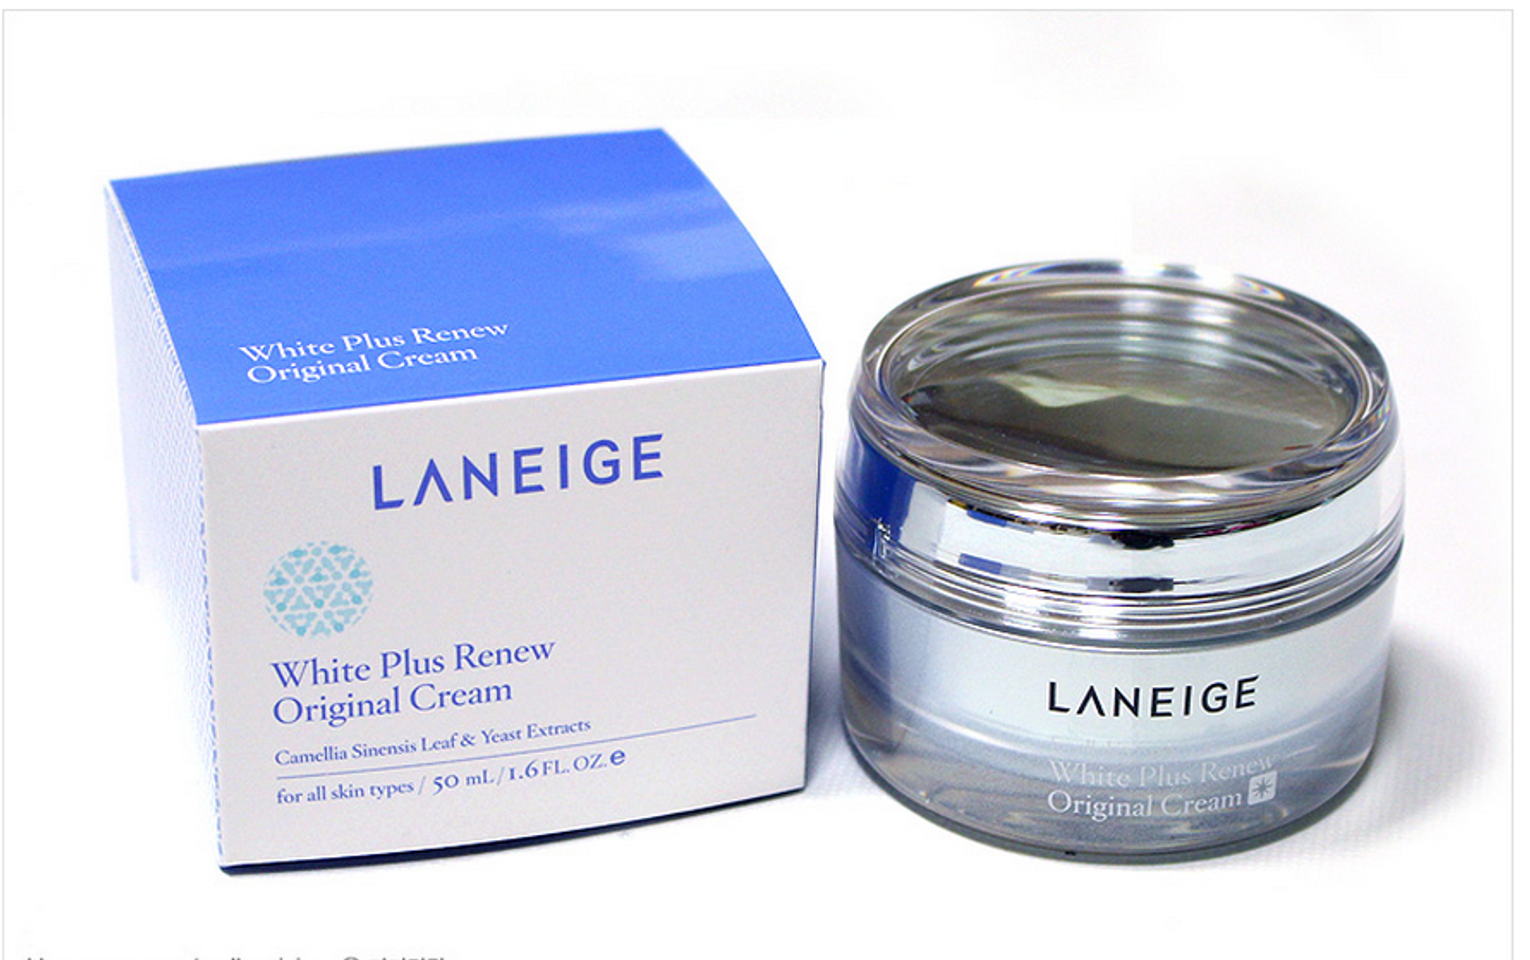 Kem dưỡng trắng da Laneige White Plus Renew Original Cream dành cho mọi loại da